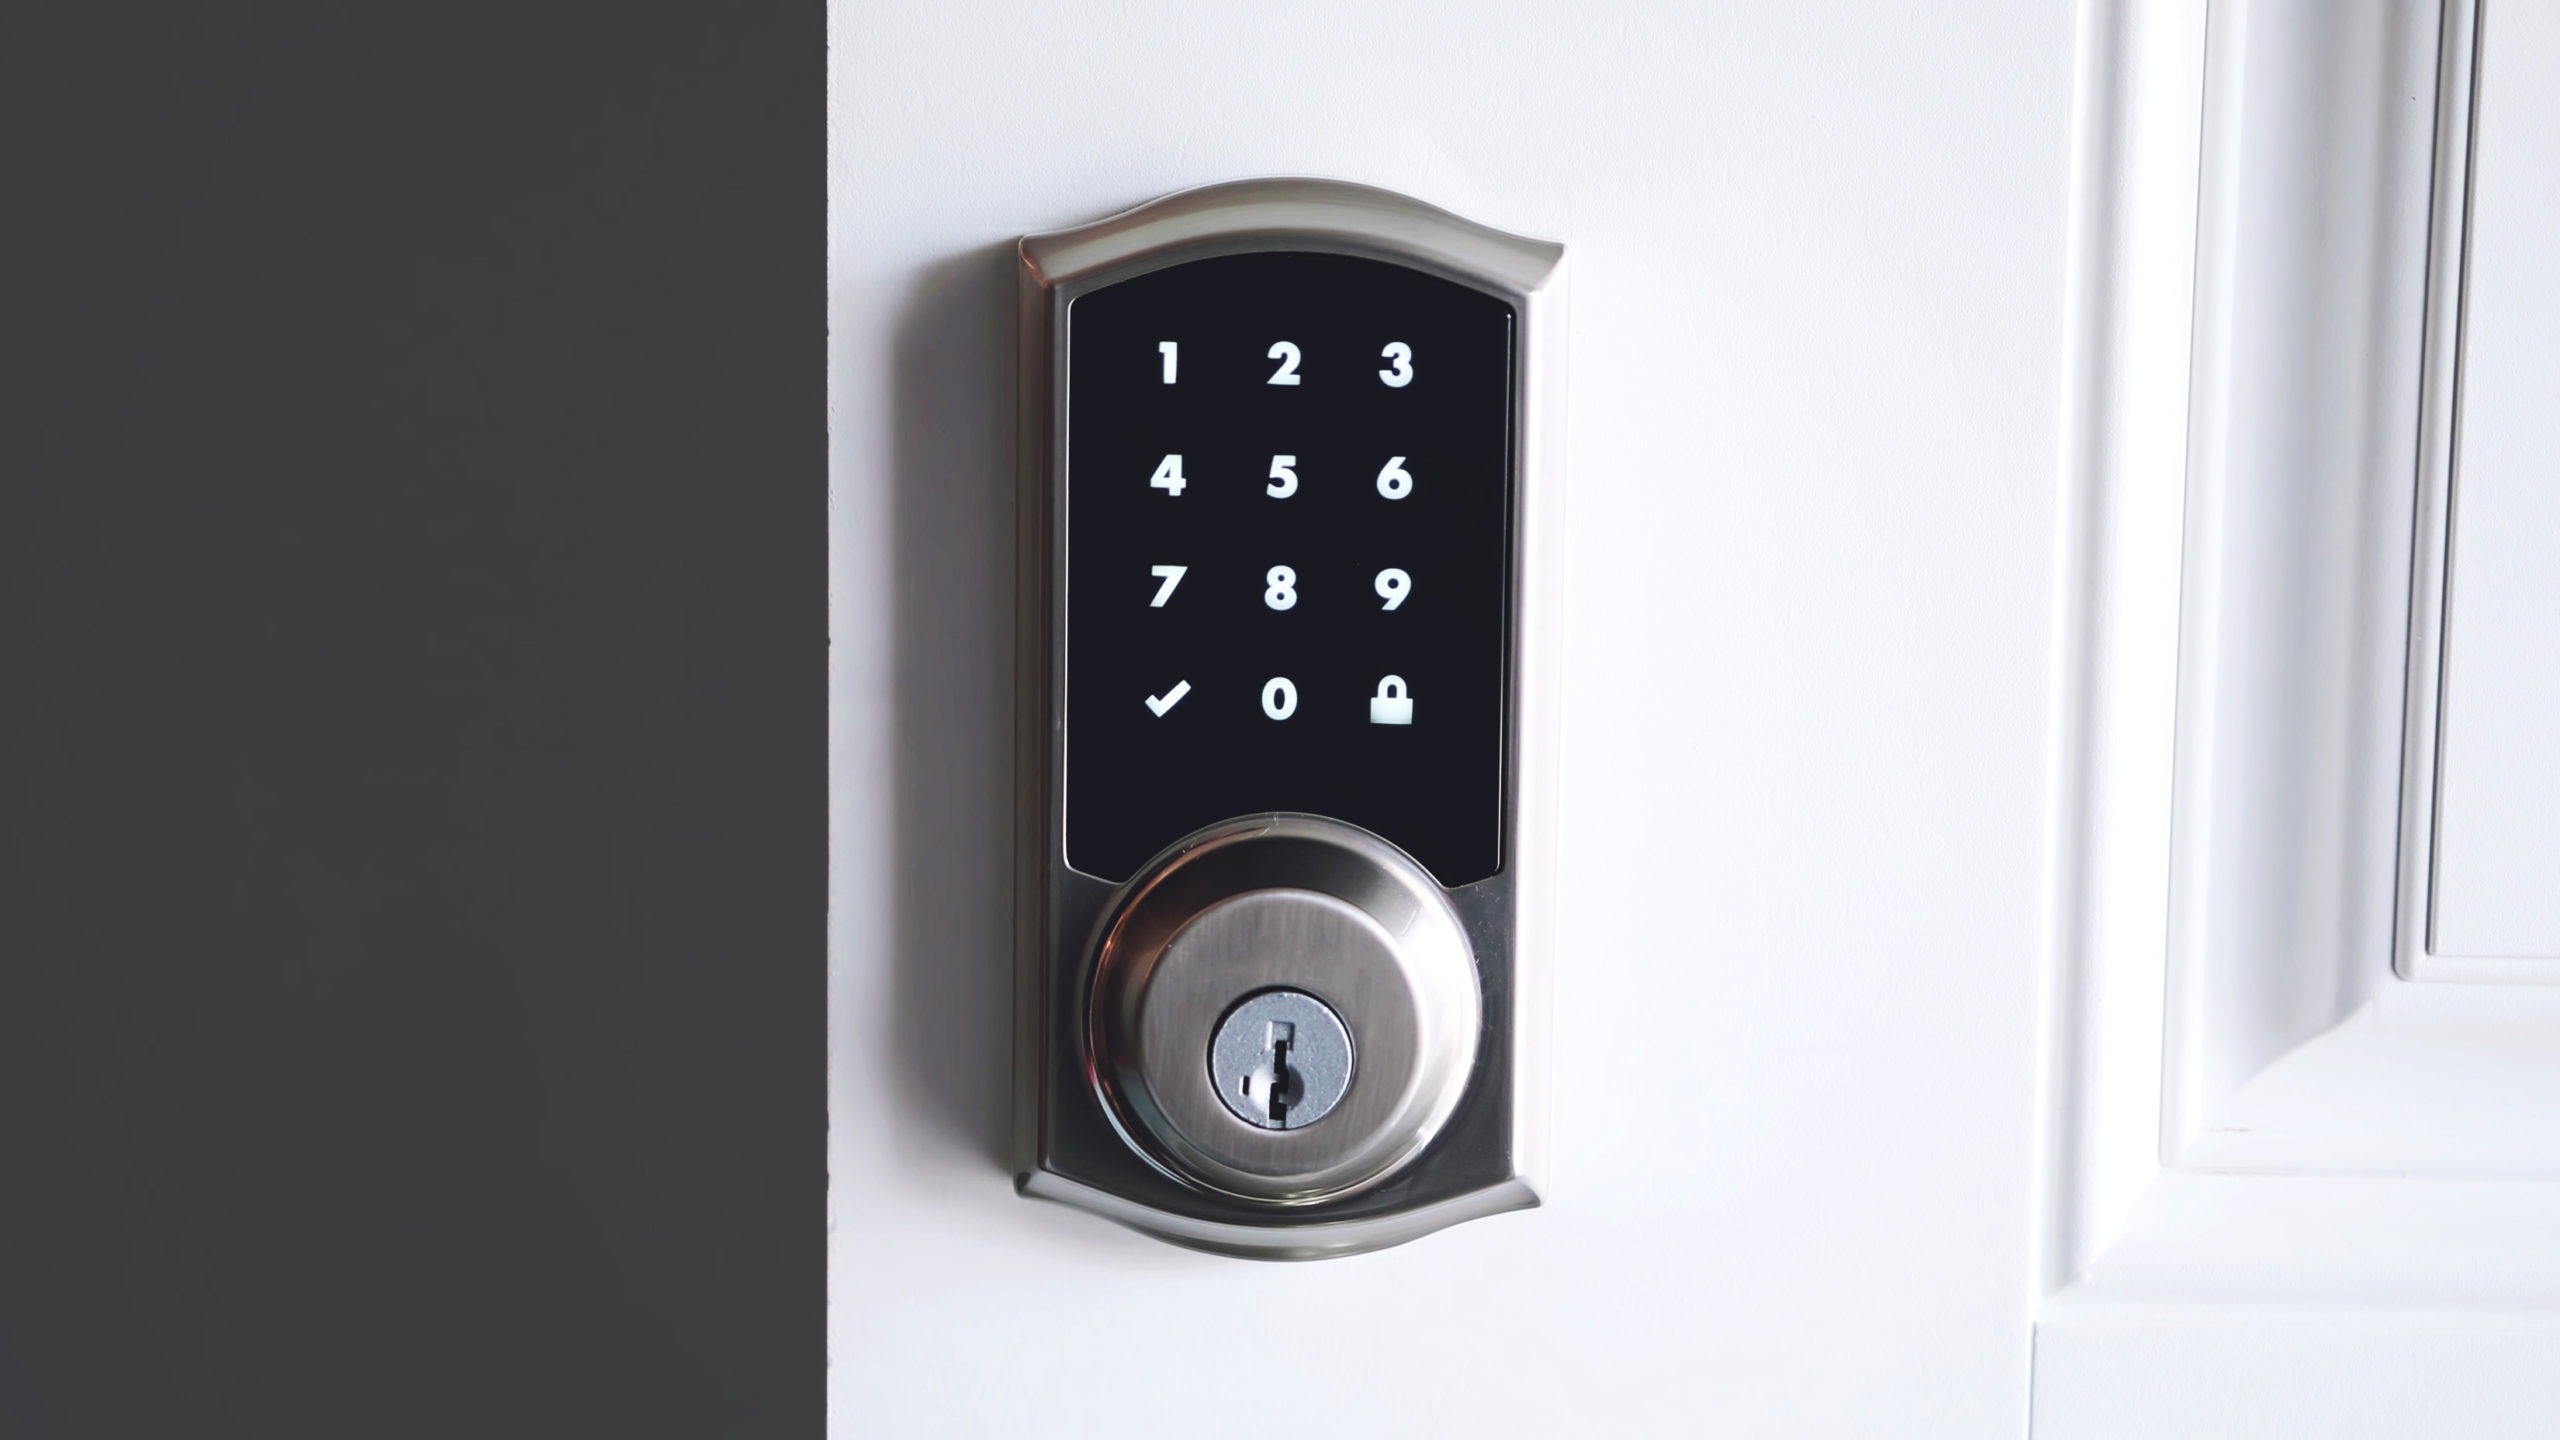 Digital smart door lock security system with the password, close